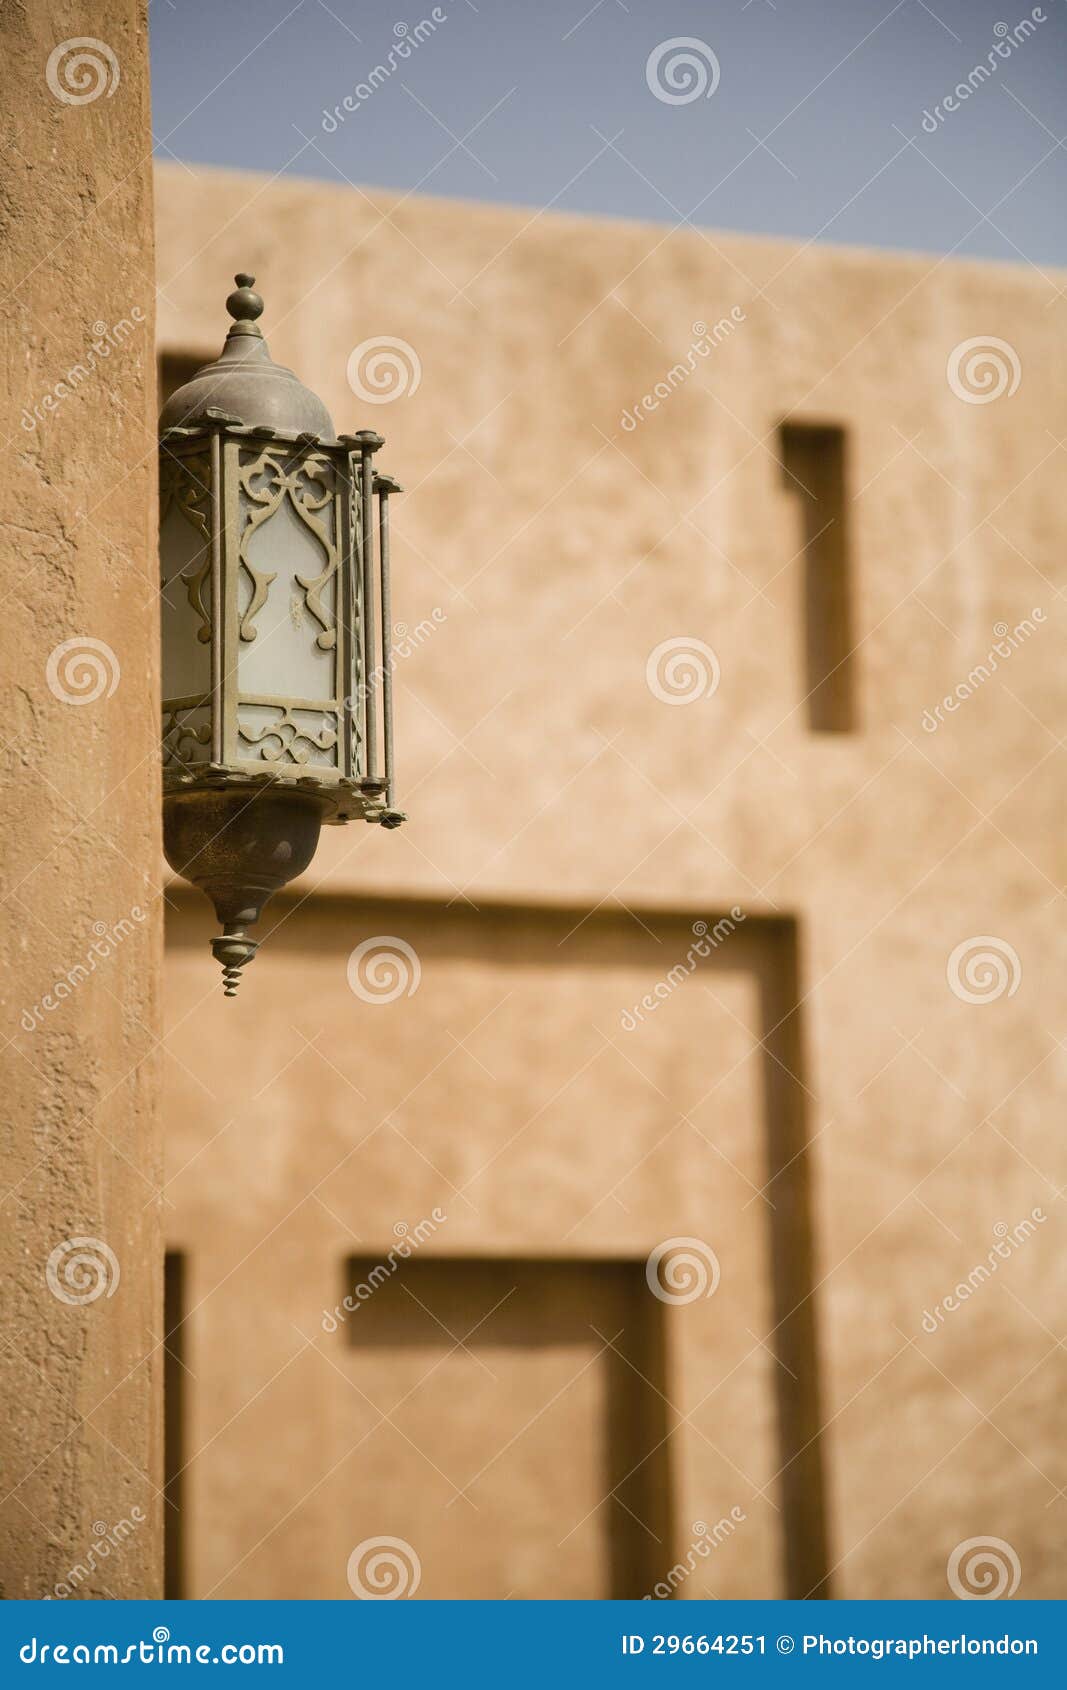 ornate lantern on al ain palace museum wall